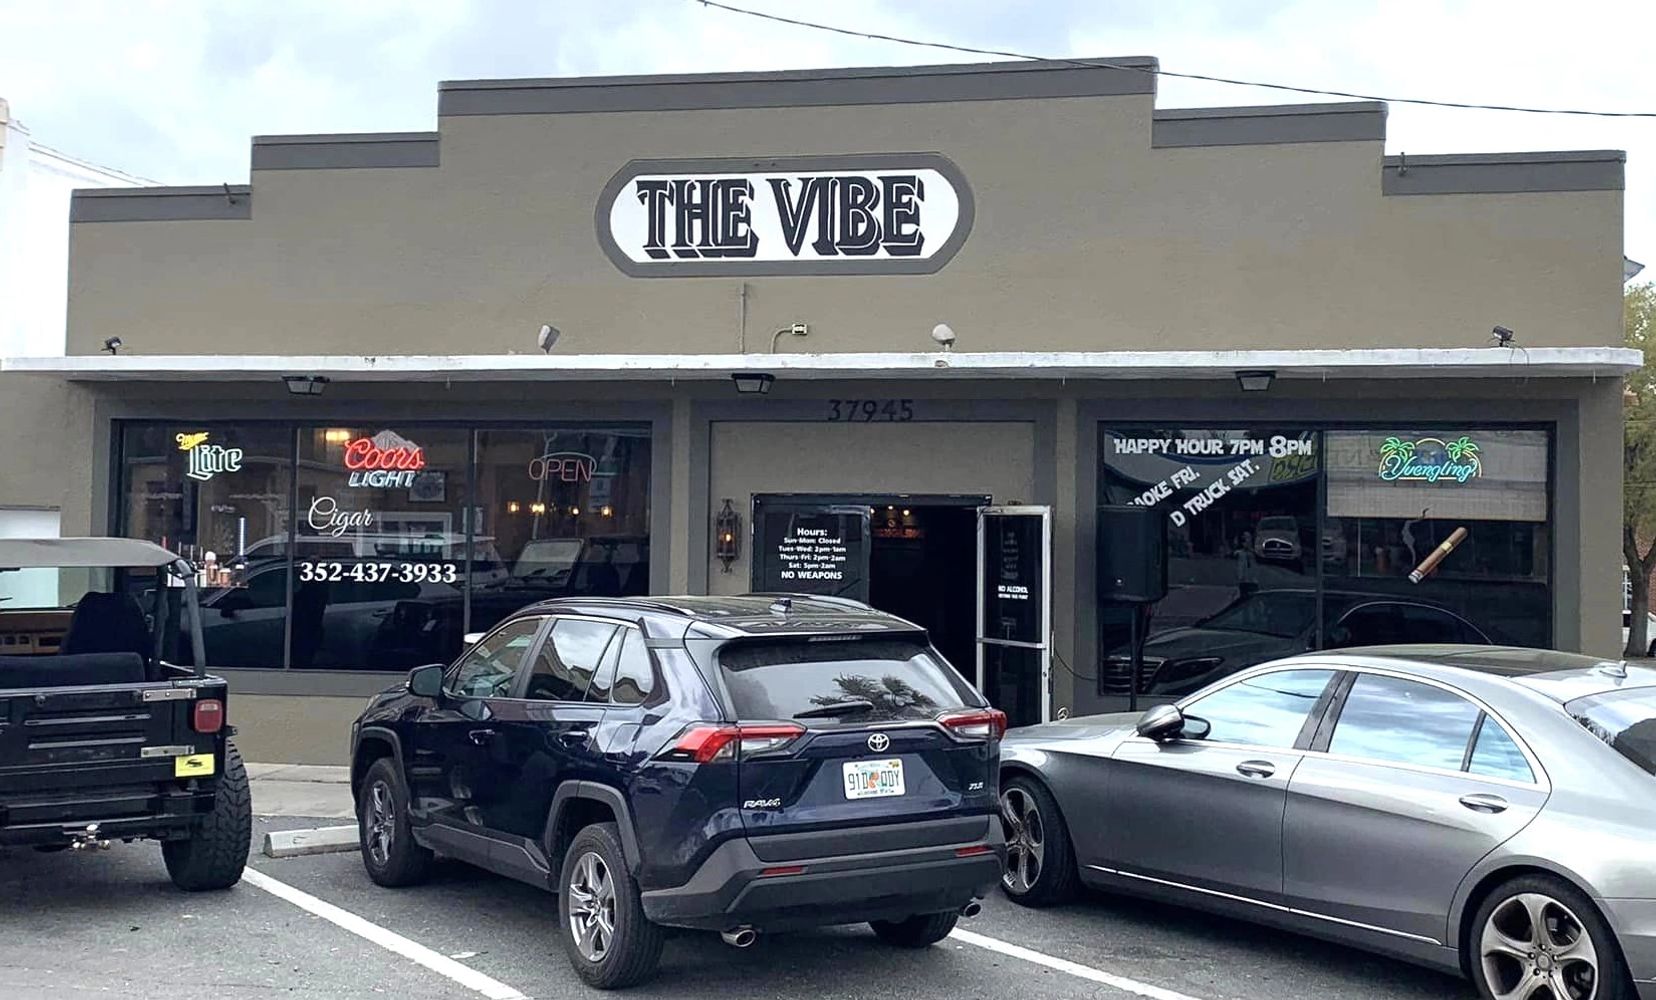 The Vibe Cigar Bar
37945 Meridian Ave.
Dade City, FL. 33525